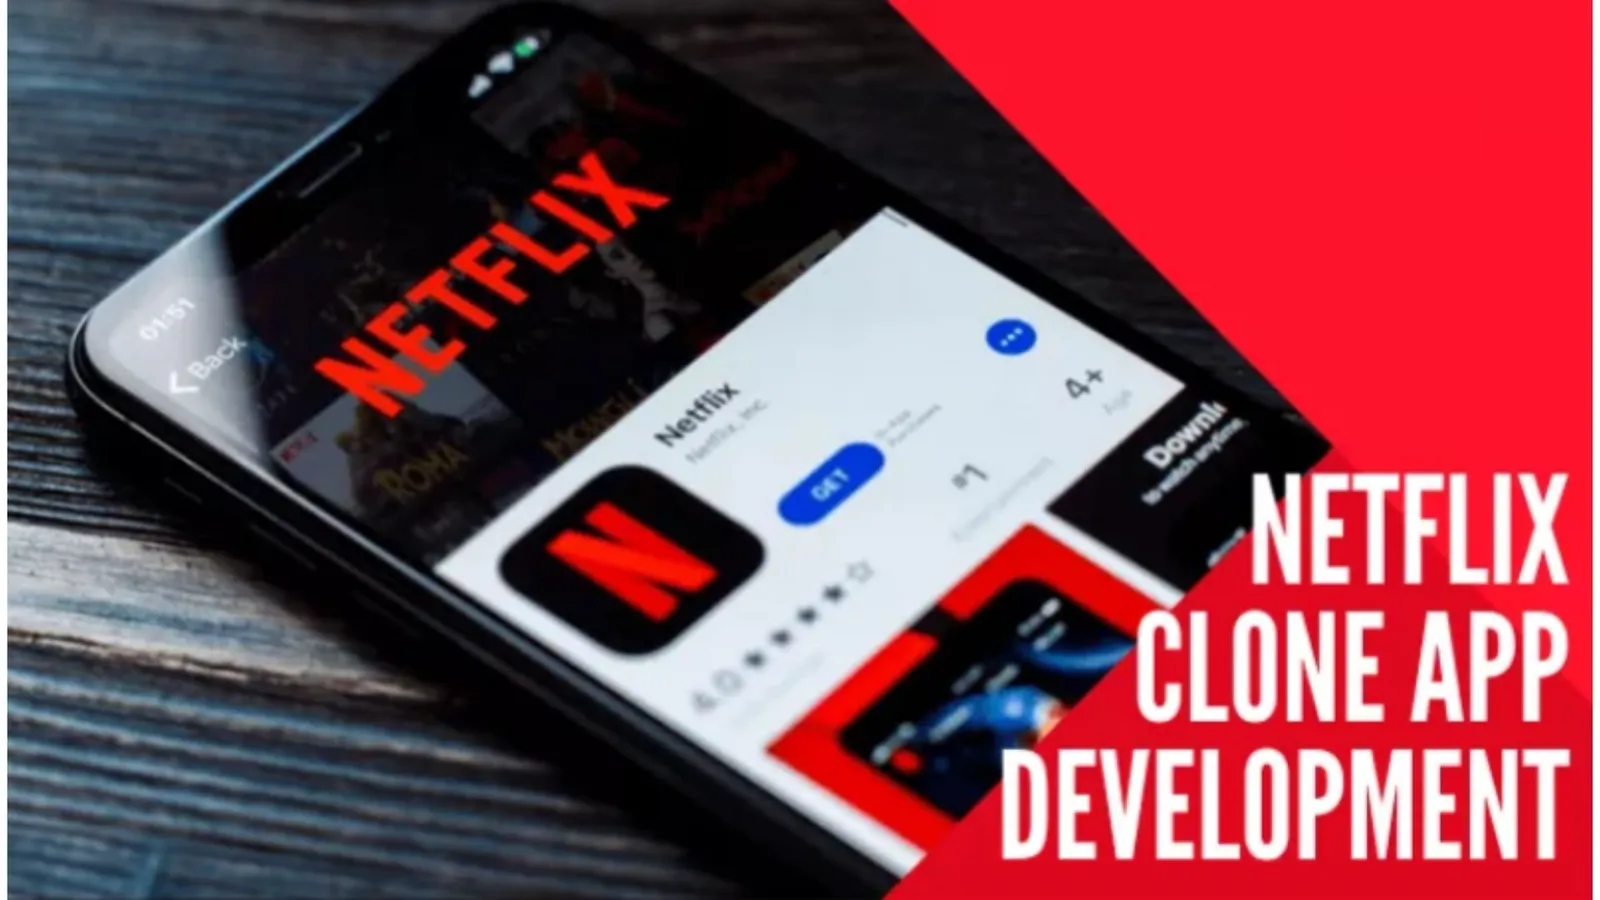 Critical Factors To Consider To Develop A Netflix Clone App